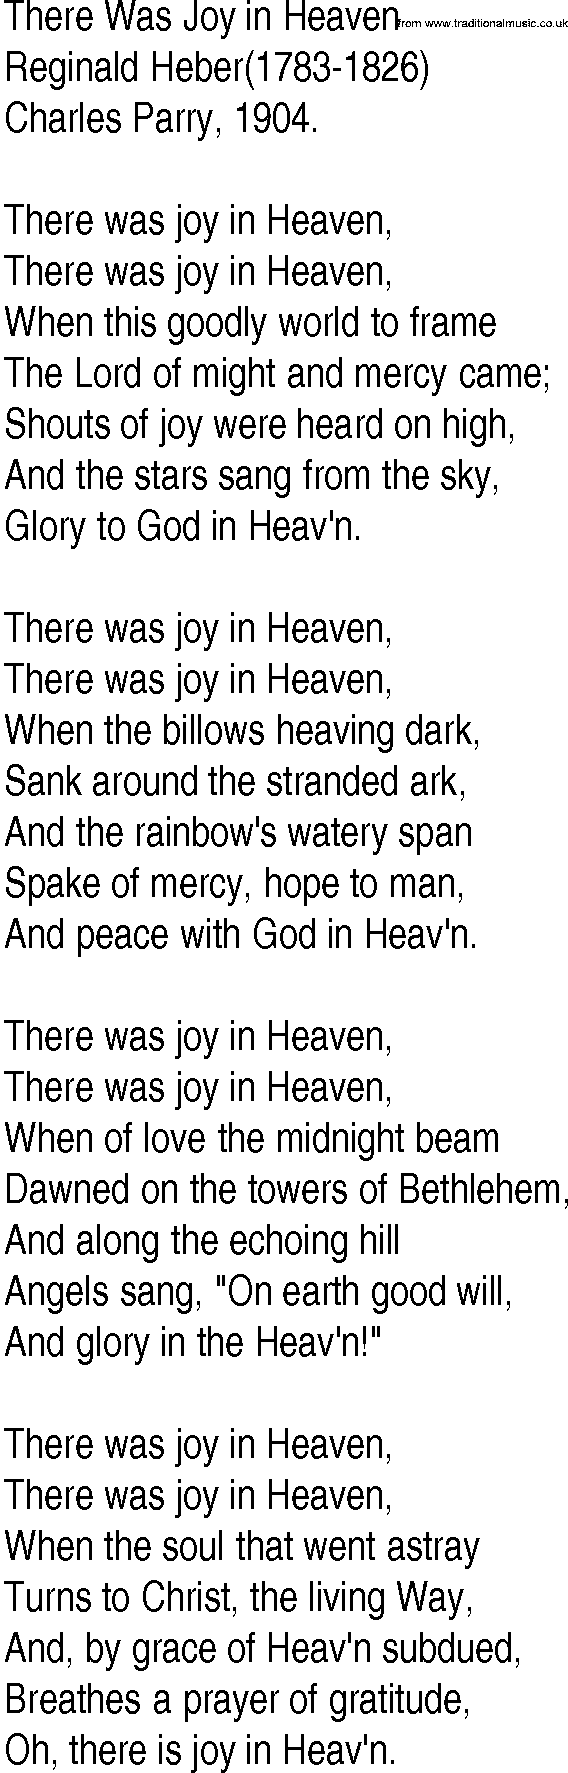 Hymn and Gospel Song: There Was Joy in Heaven by Reginald Heber lyrics